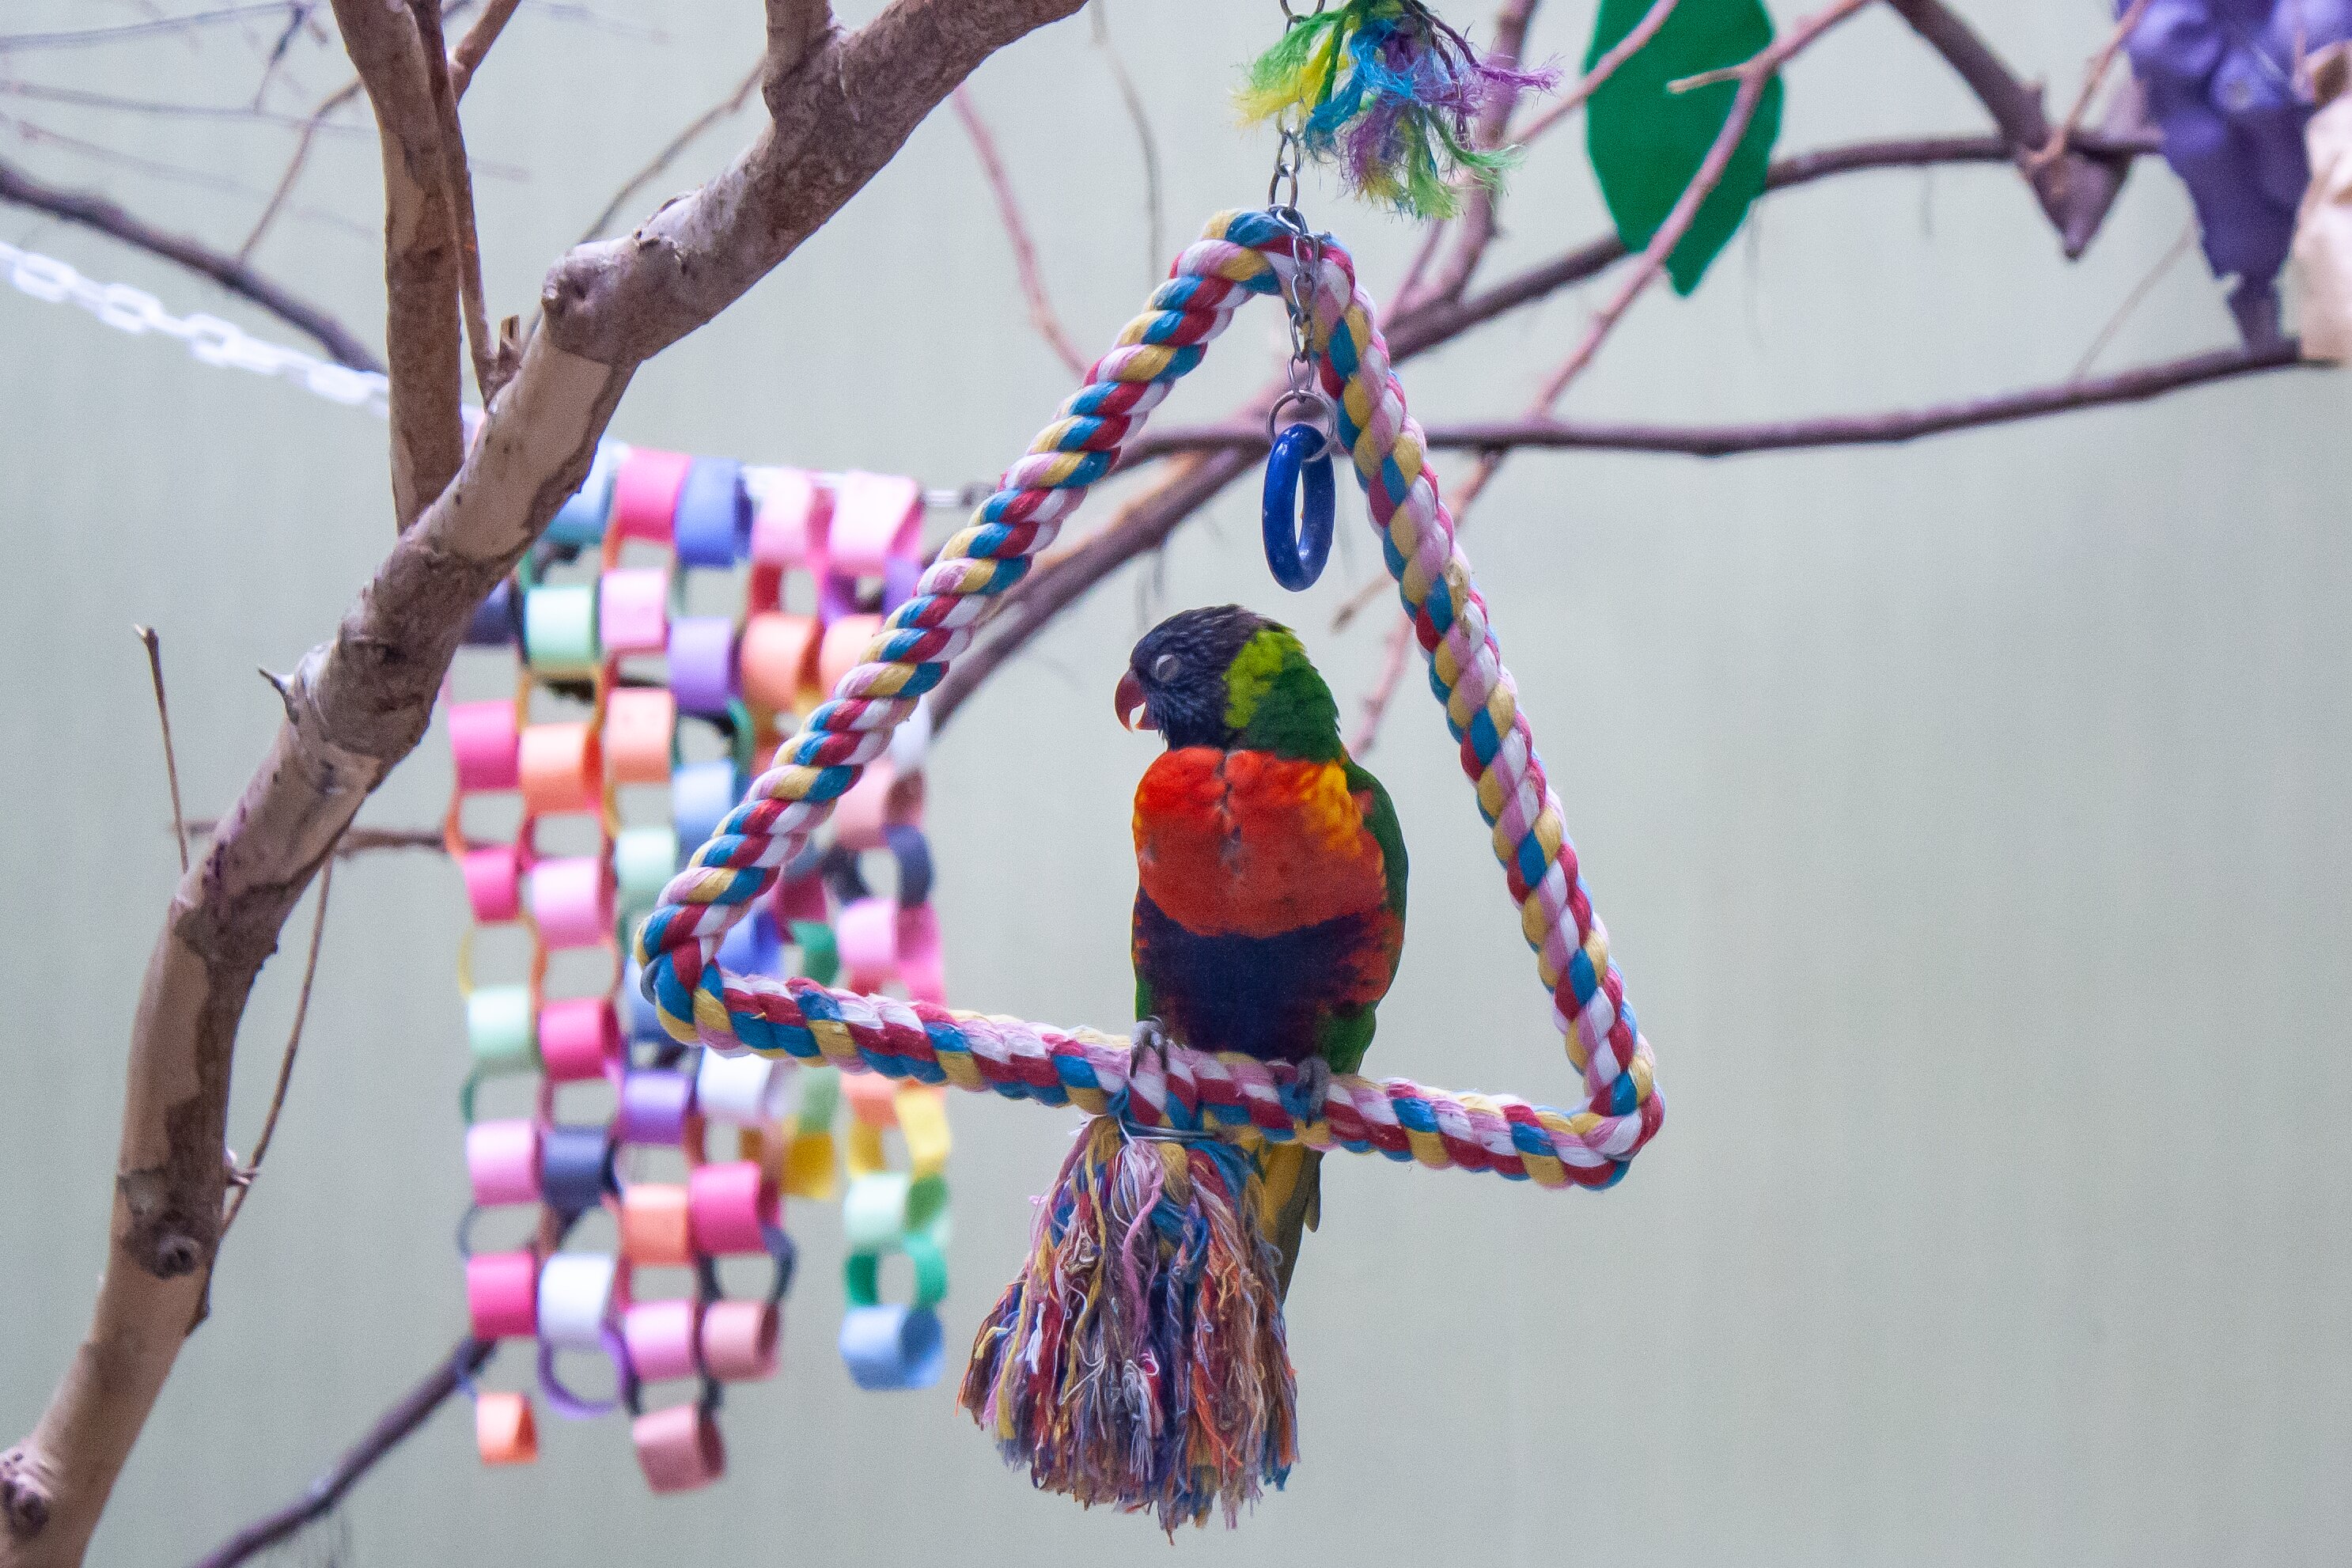 a rainbow lorikeet swinging on a toy